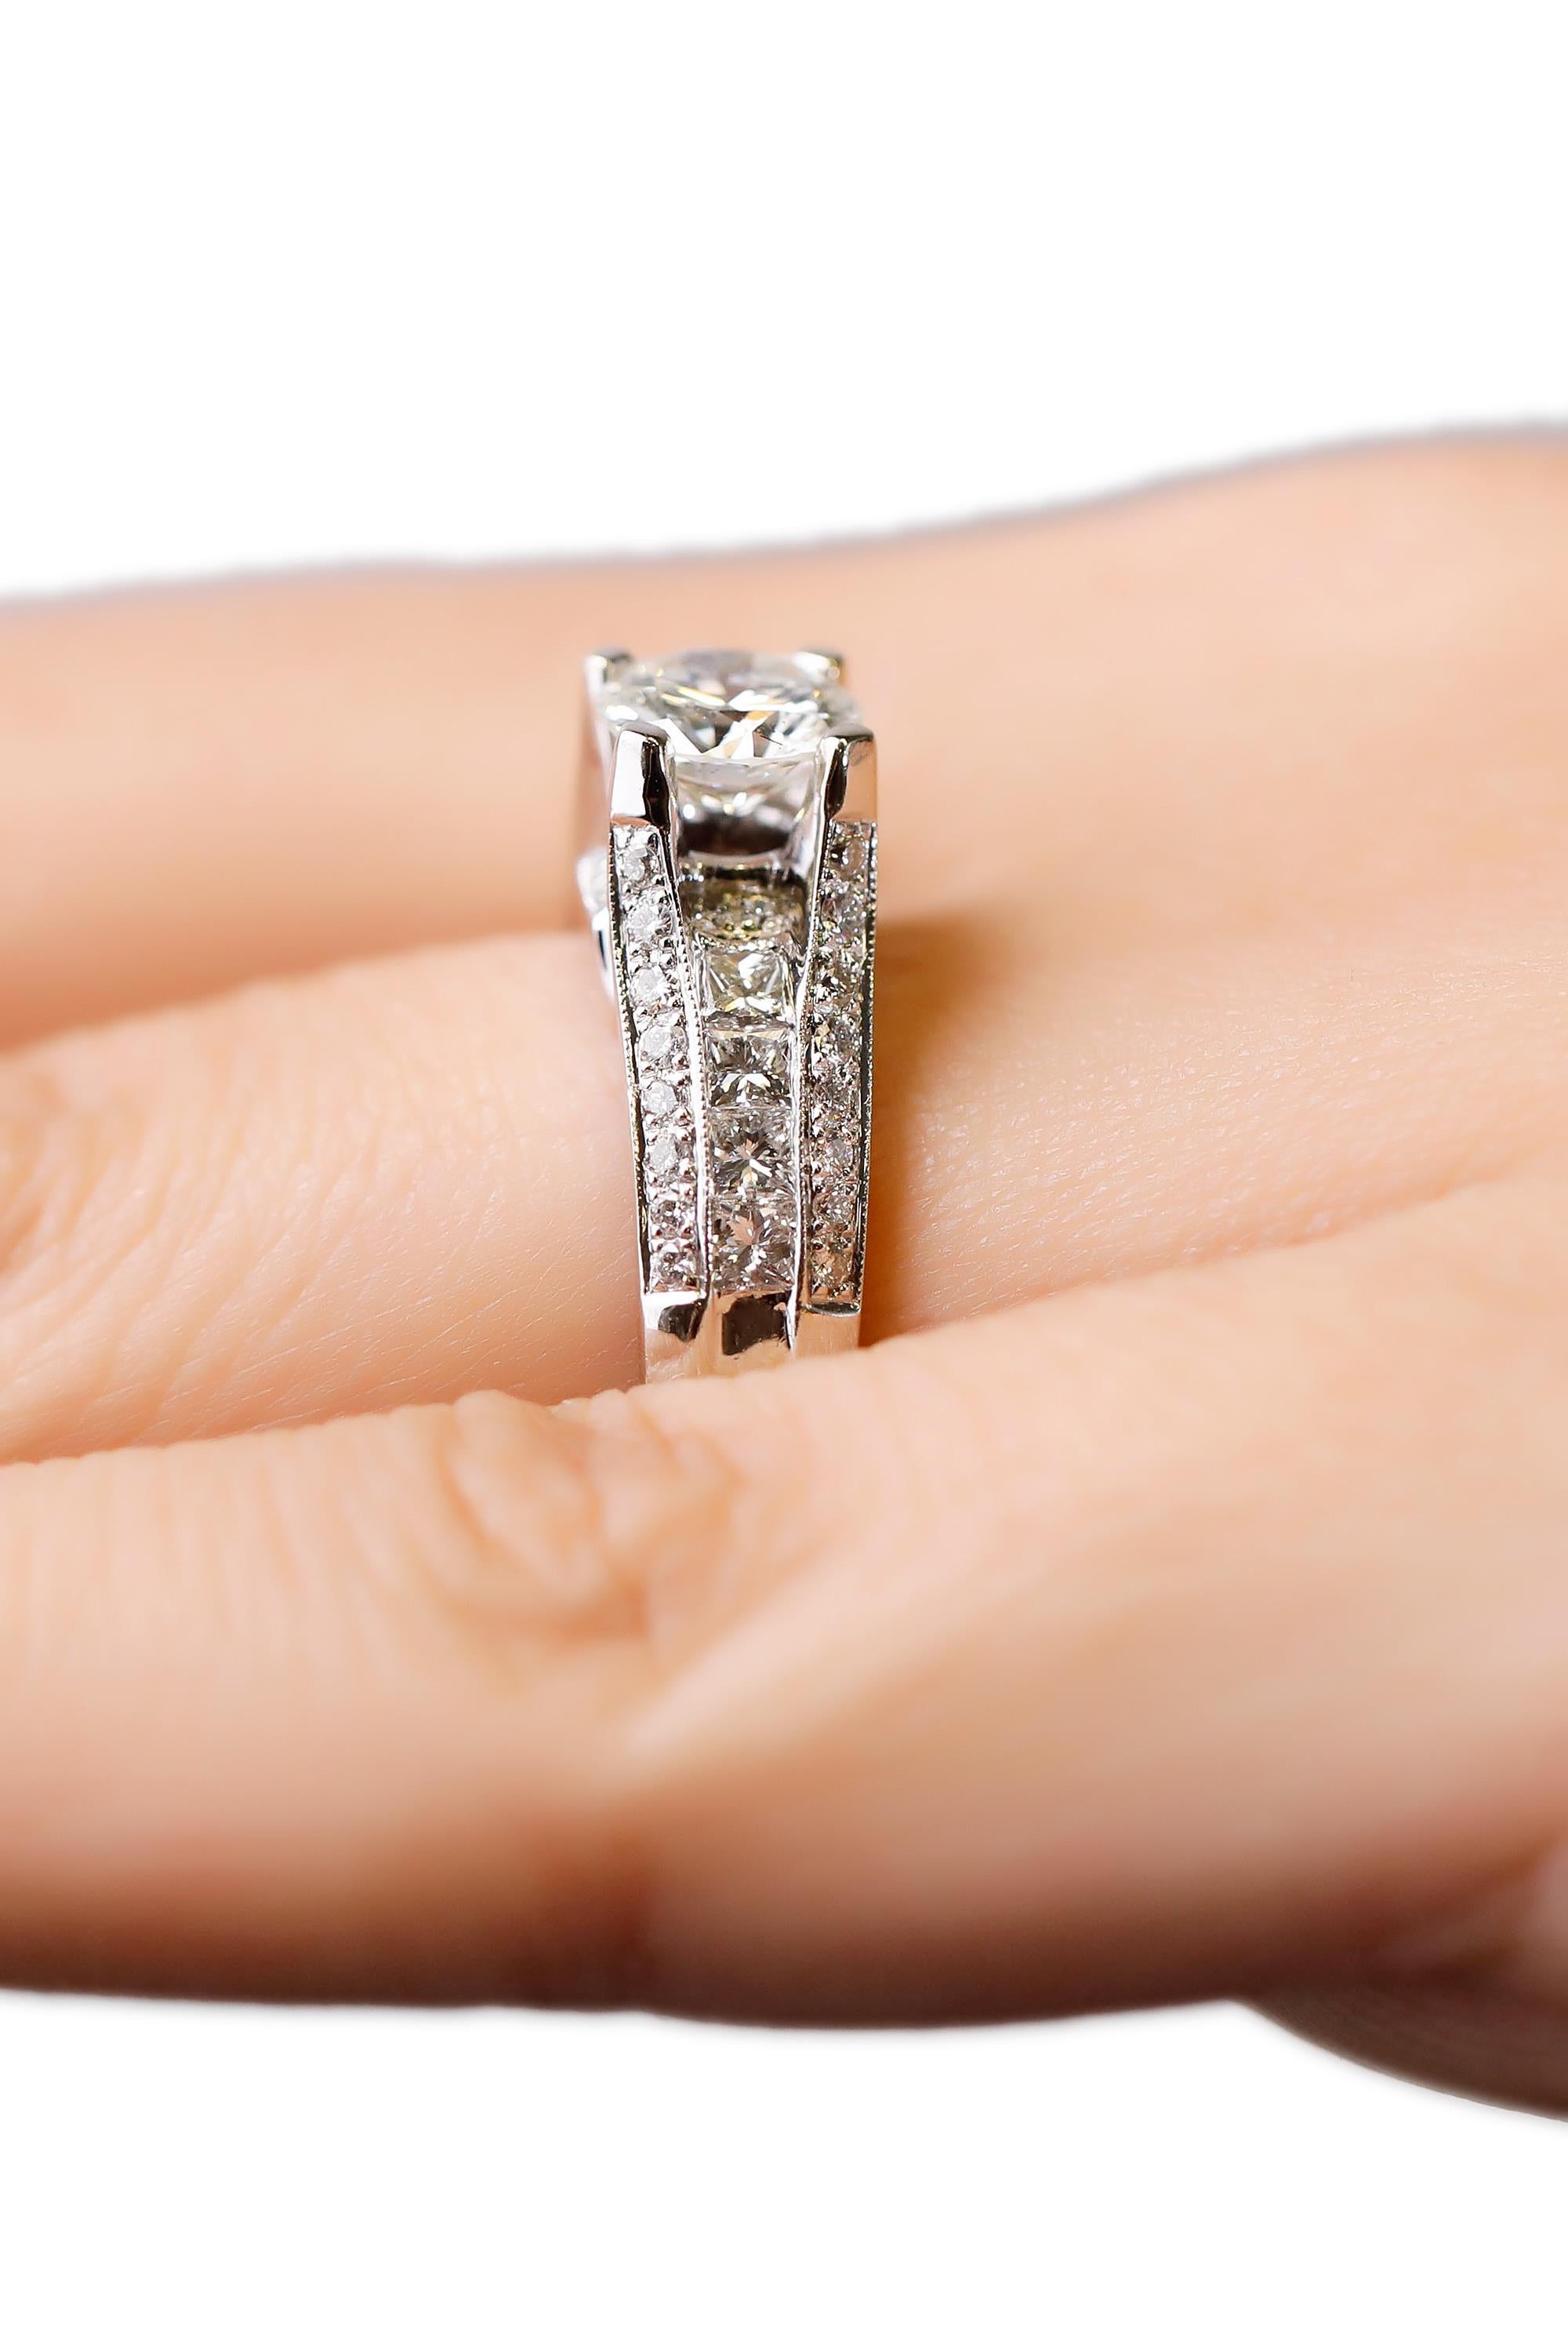 Art Deco 14 Karat White Gold Yellow Diamond Halo Engagement Ring Designed by Natalie K